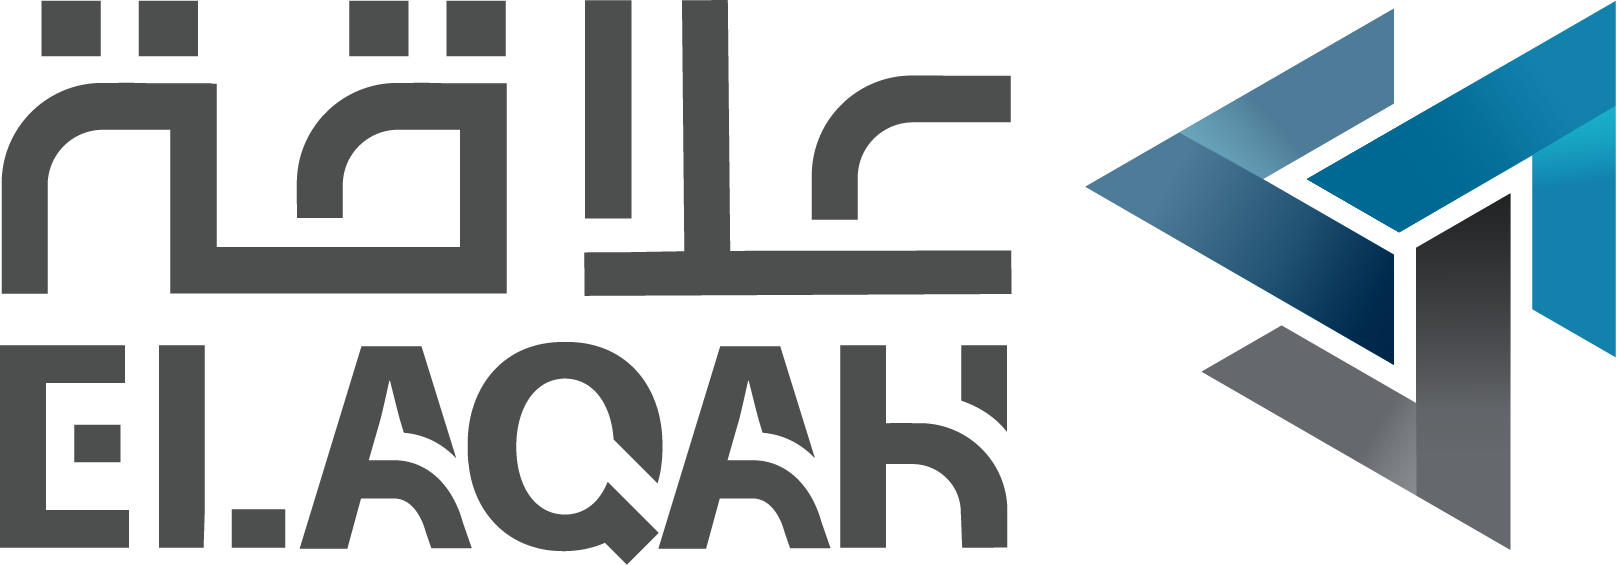 Tatweer Misr Showcase Logo